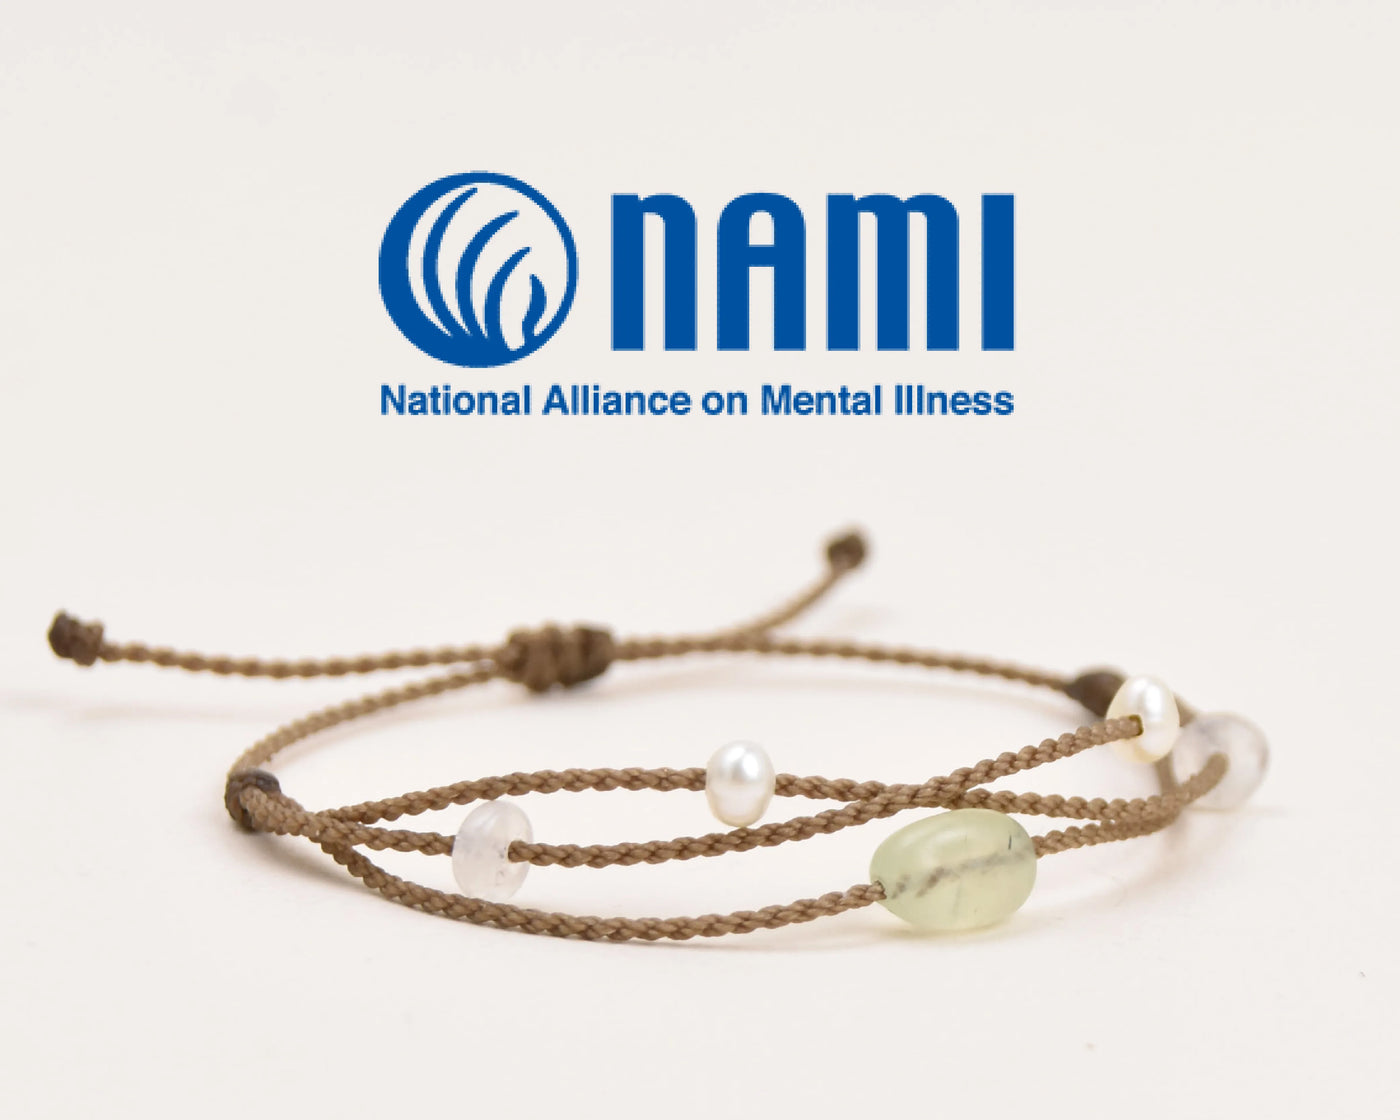 Mental Health Matters Riptide Bracelet with NAMI text overtop